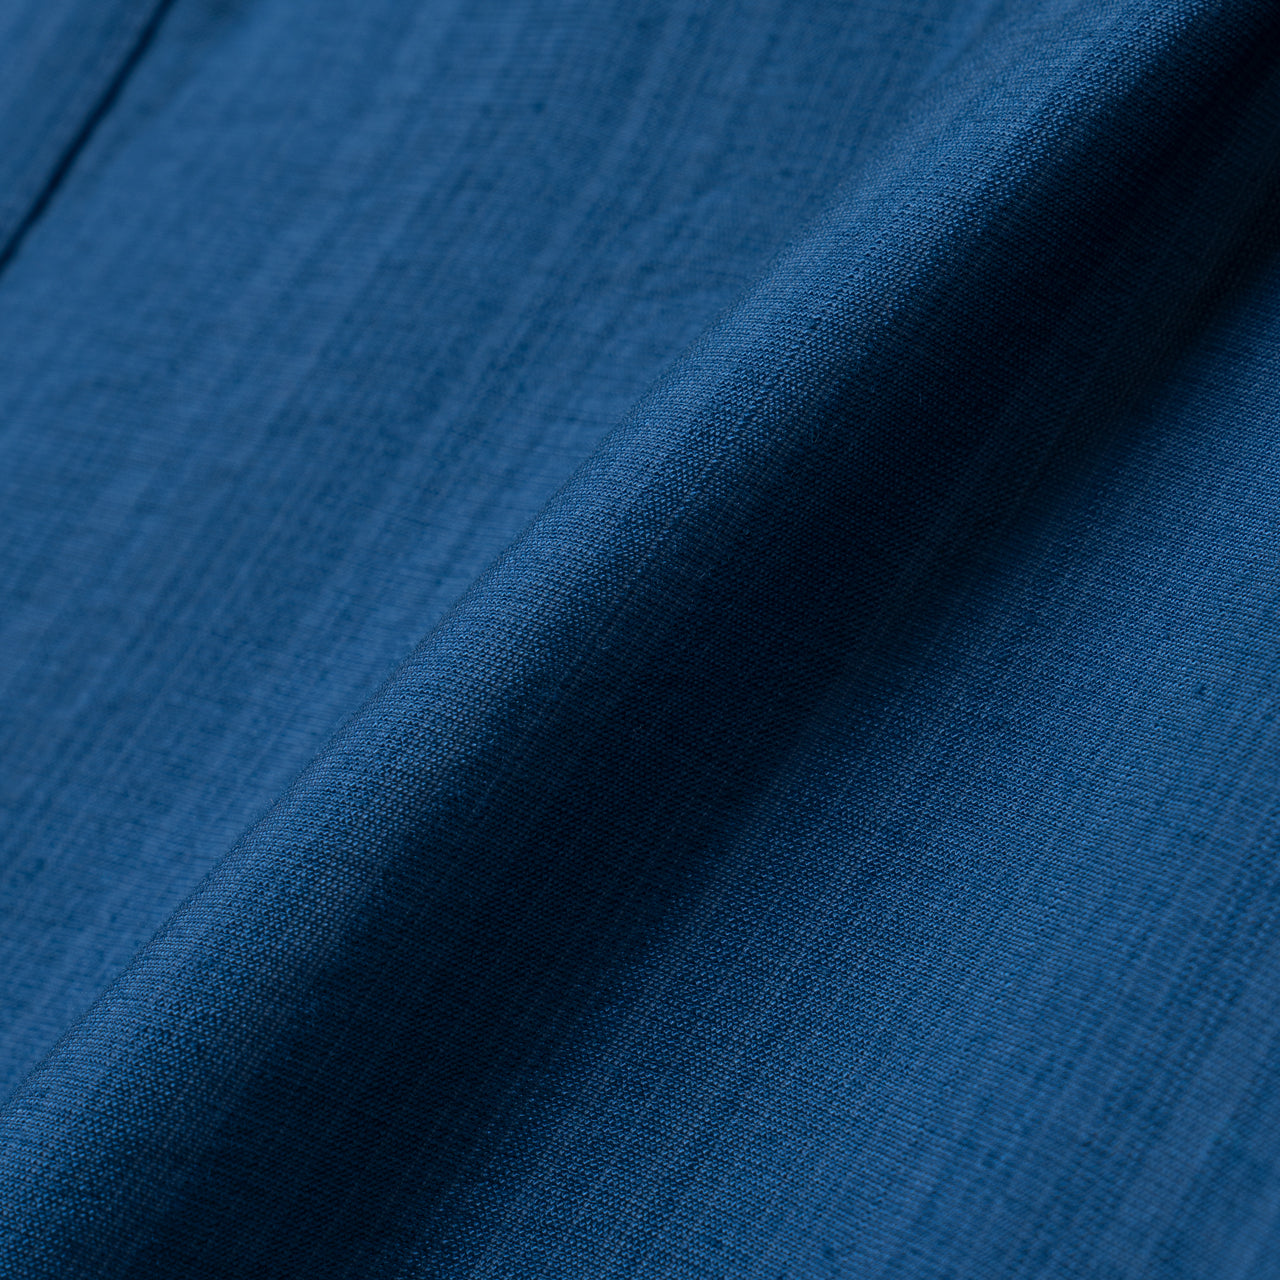 FACTORY SALE - Shad Short Sleeve T-Shirt - Blue